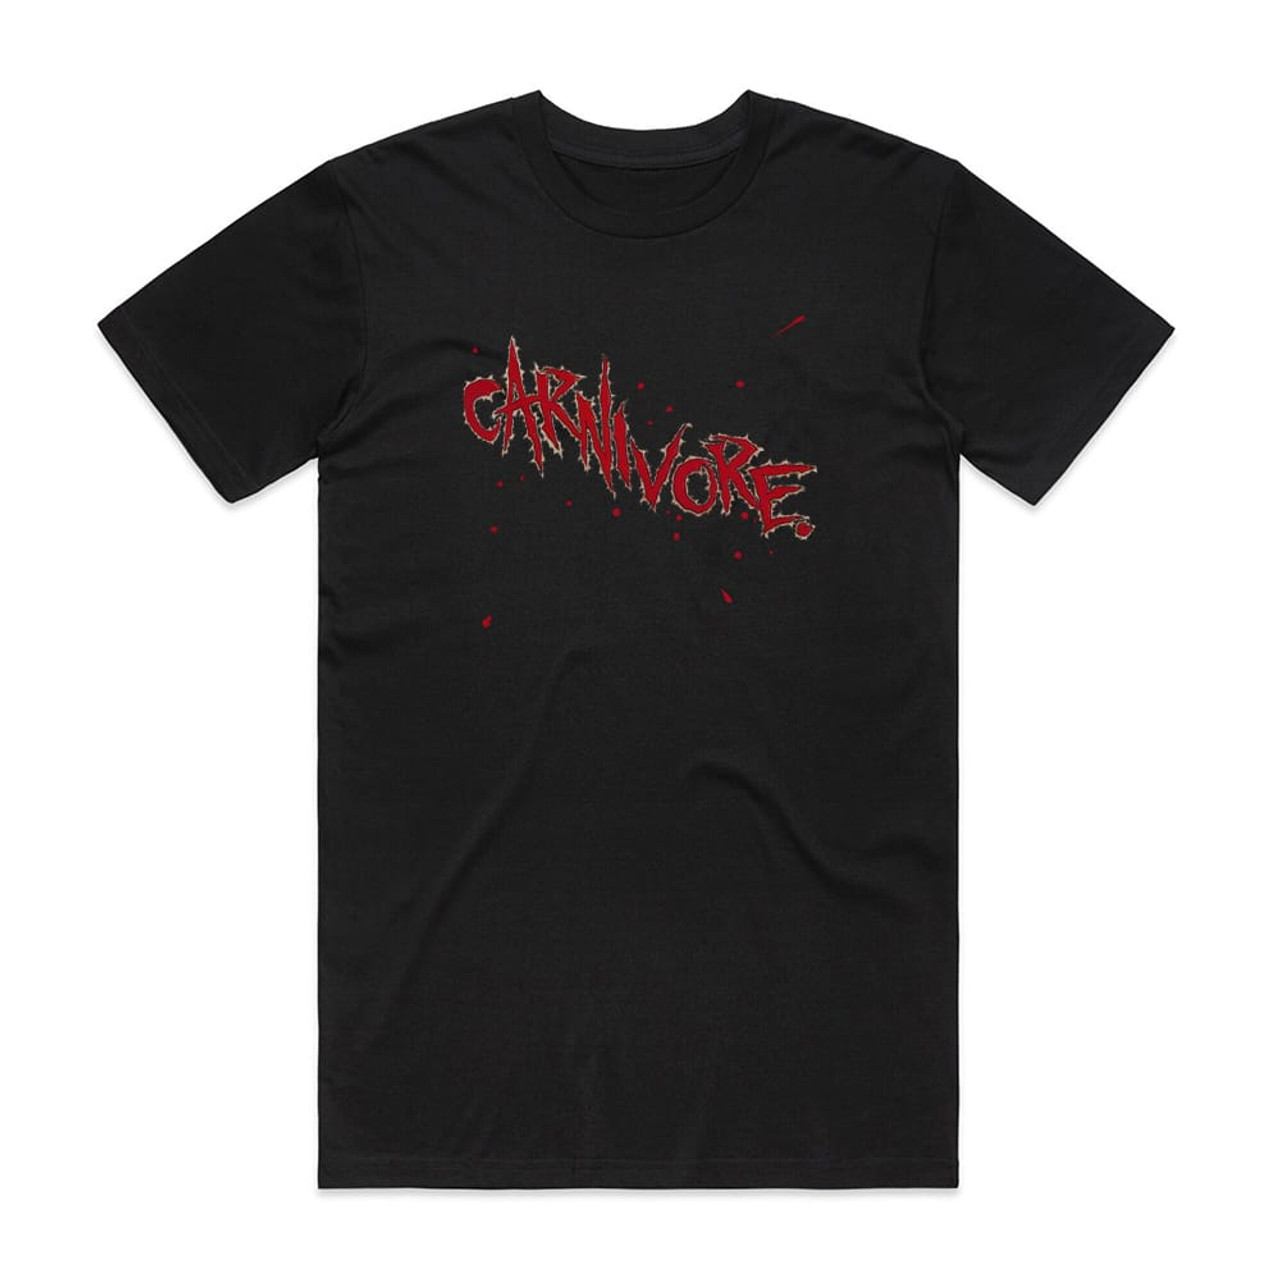 Carnivore Carnivore Album Cover T-Shirt Black